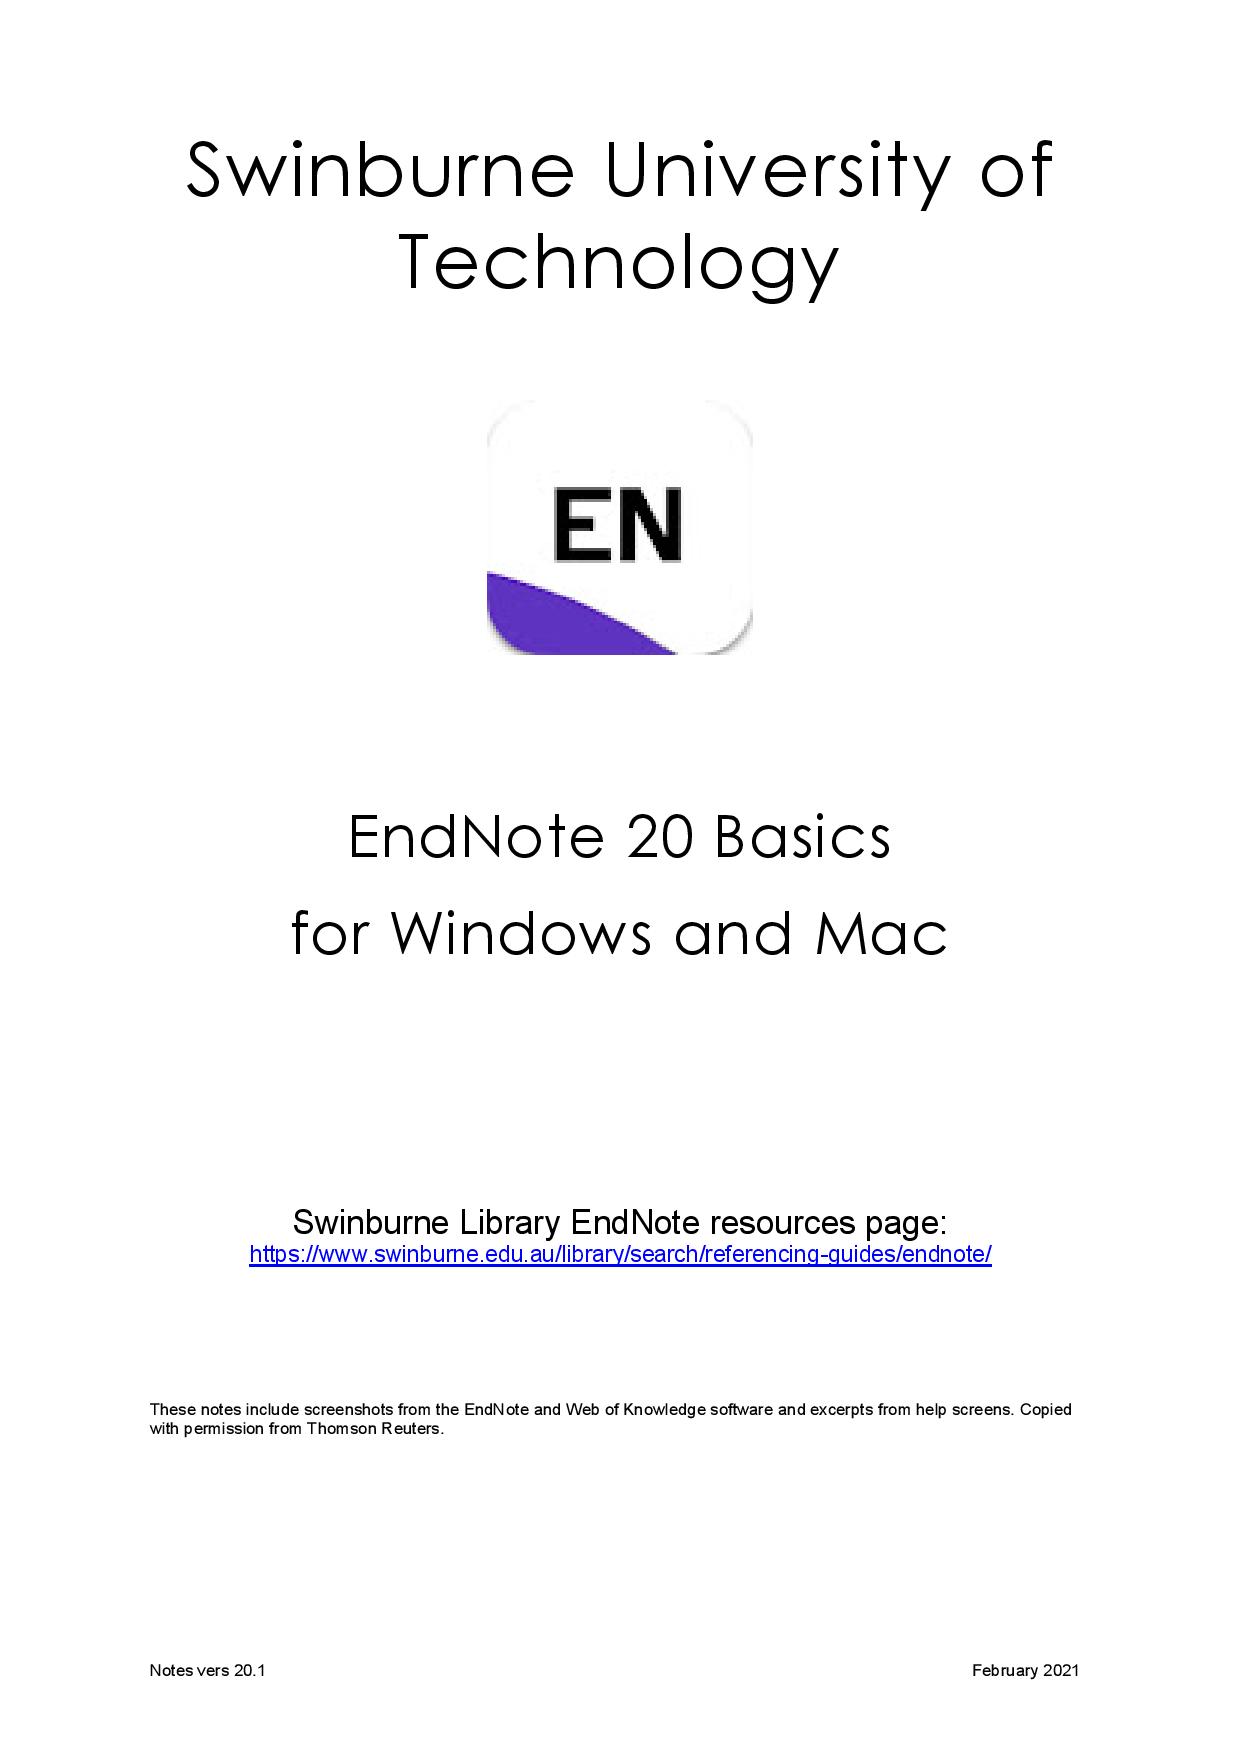 Swinburne EndNote桌面指南(Windows和Mac)